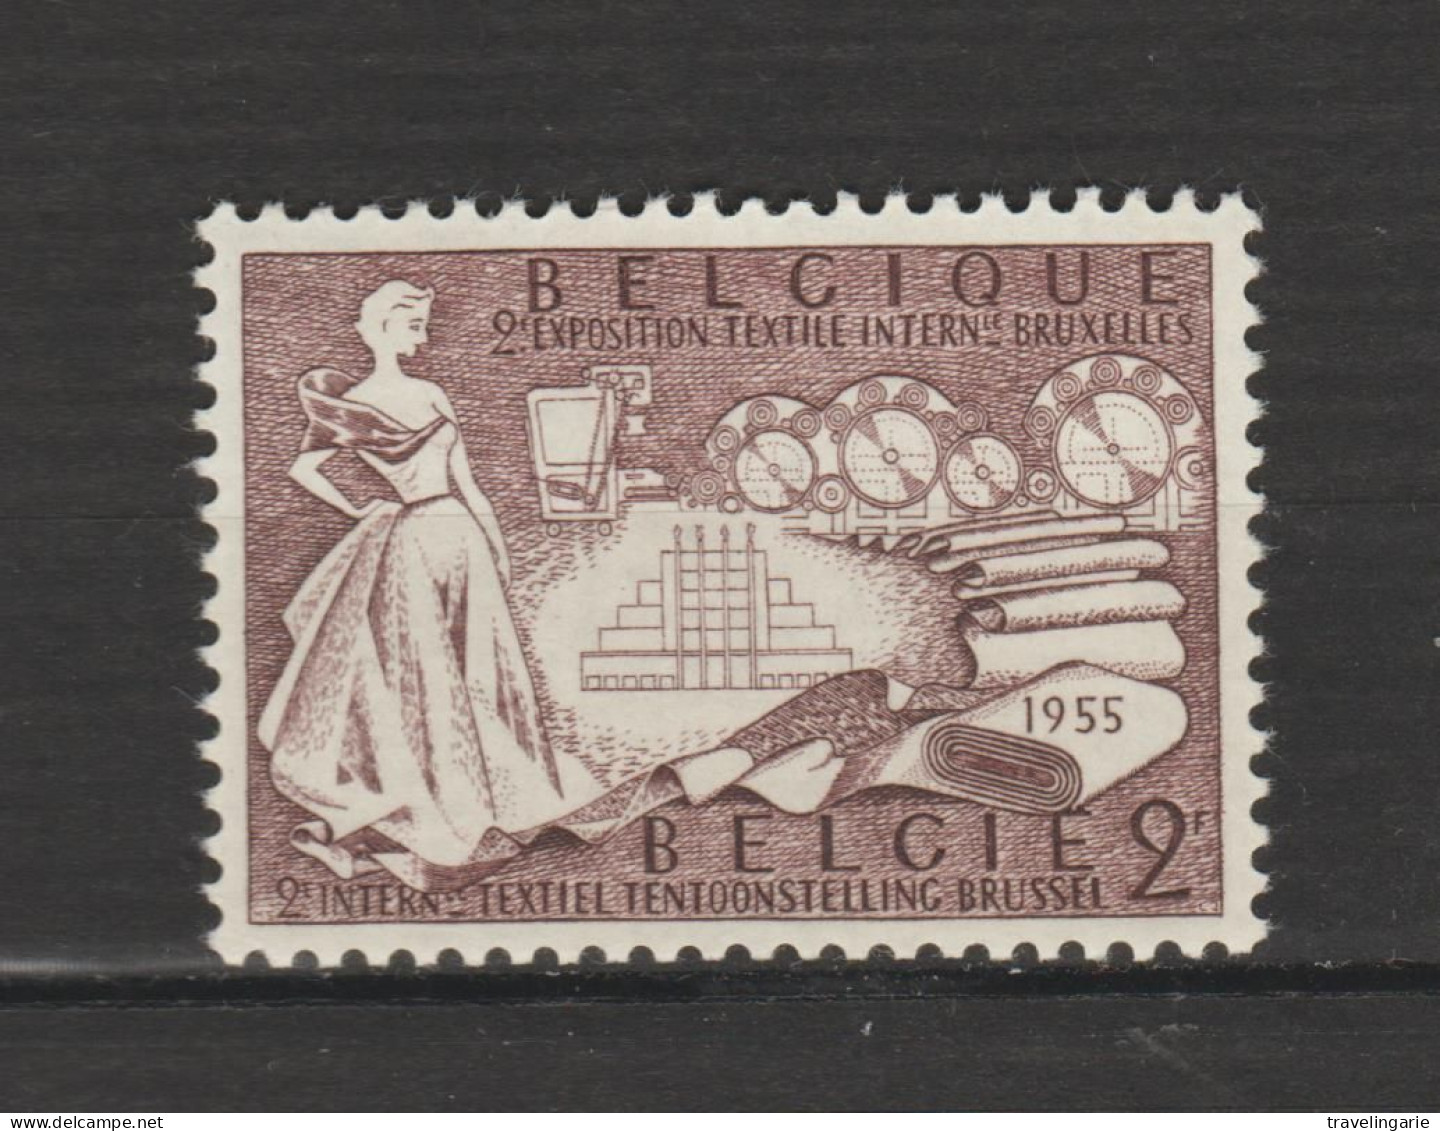 Belgium 1955 2nd International Textile Exhibition Brussels MNH ** - Textile